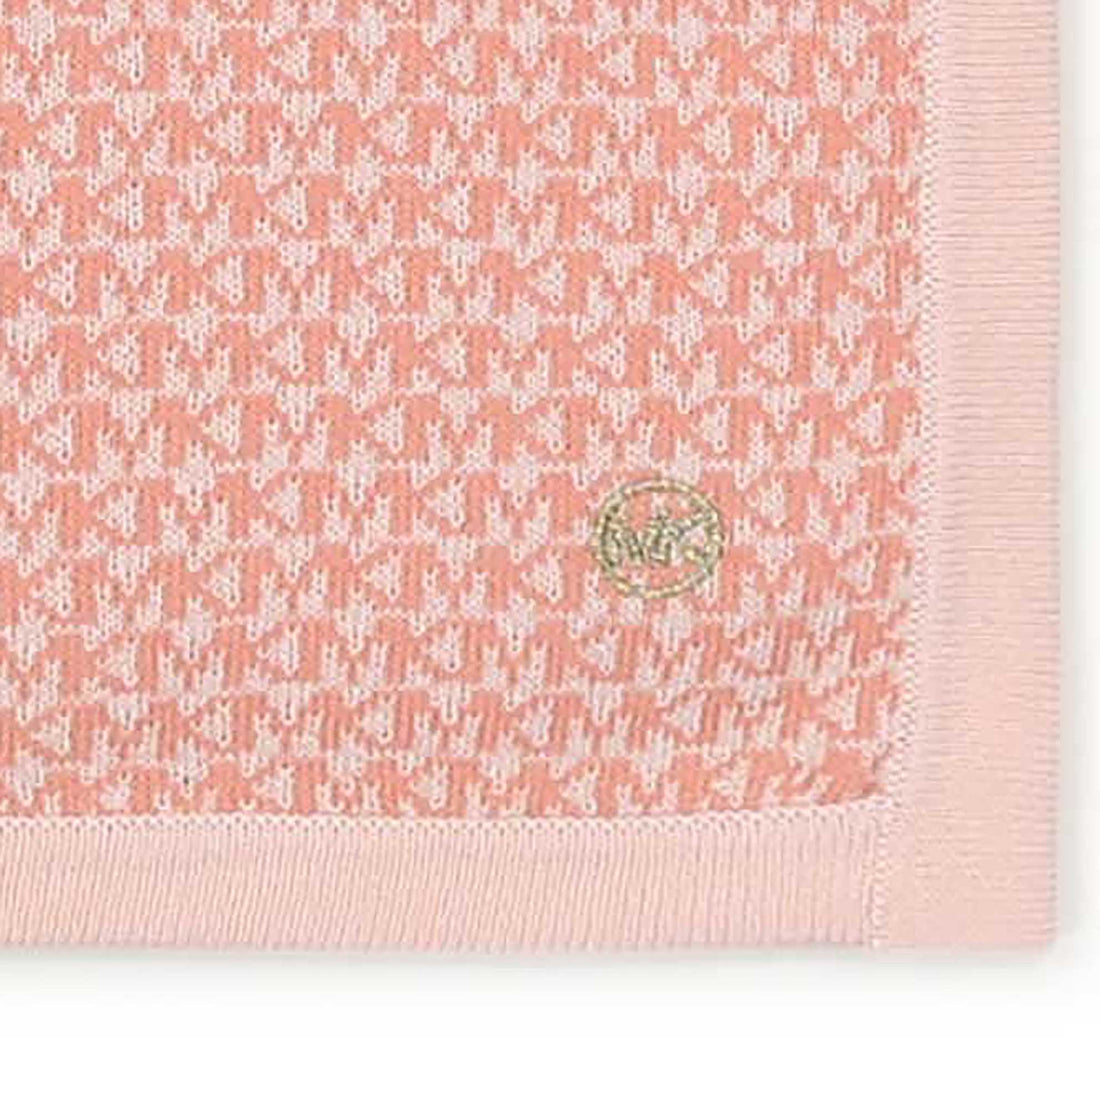 Michael Kors Blanket Style: R90023